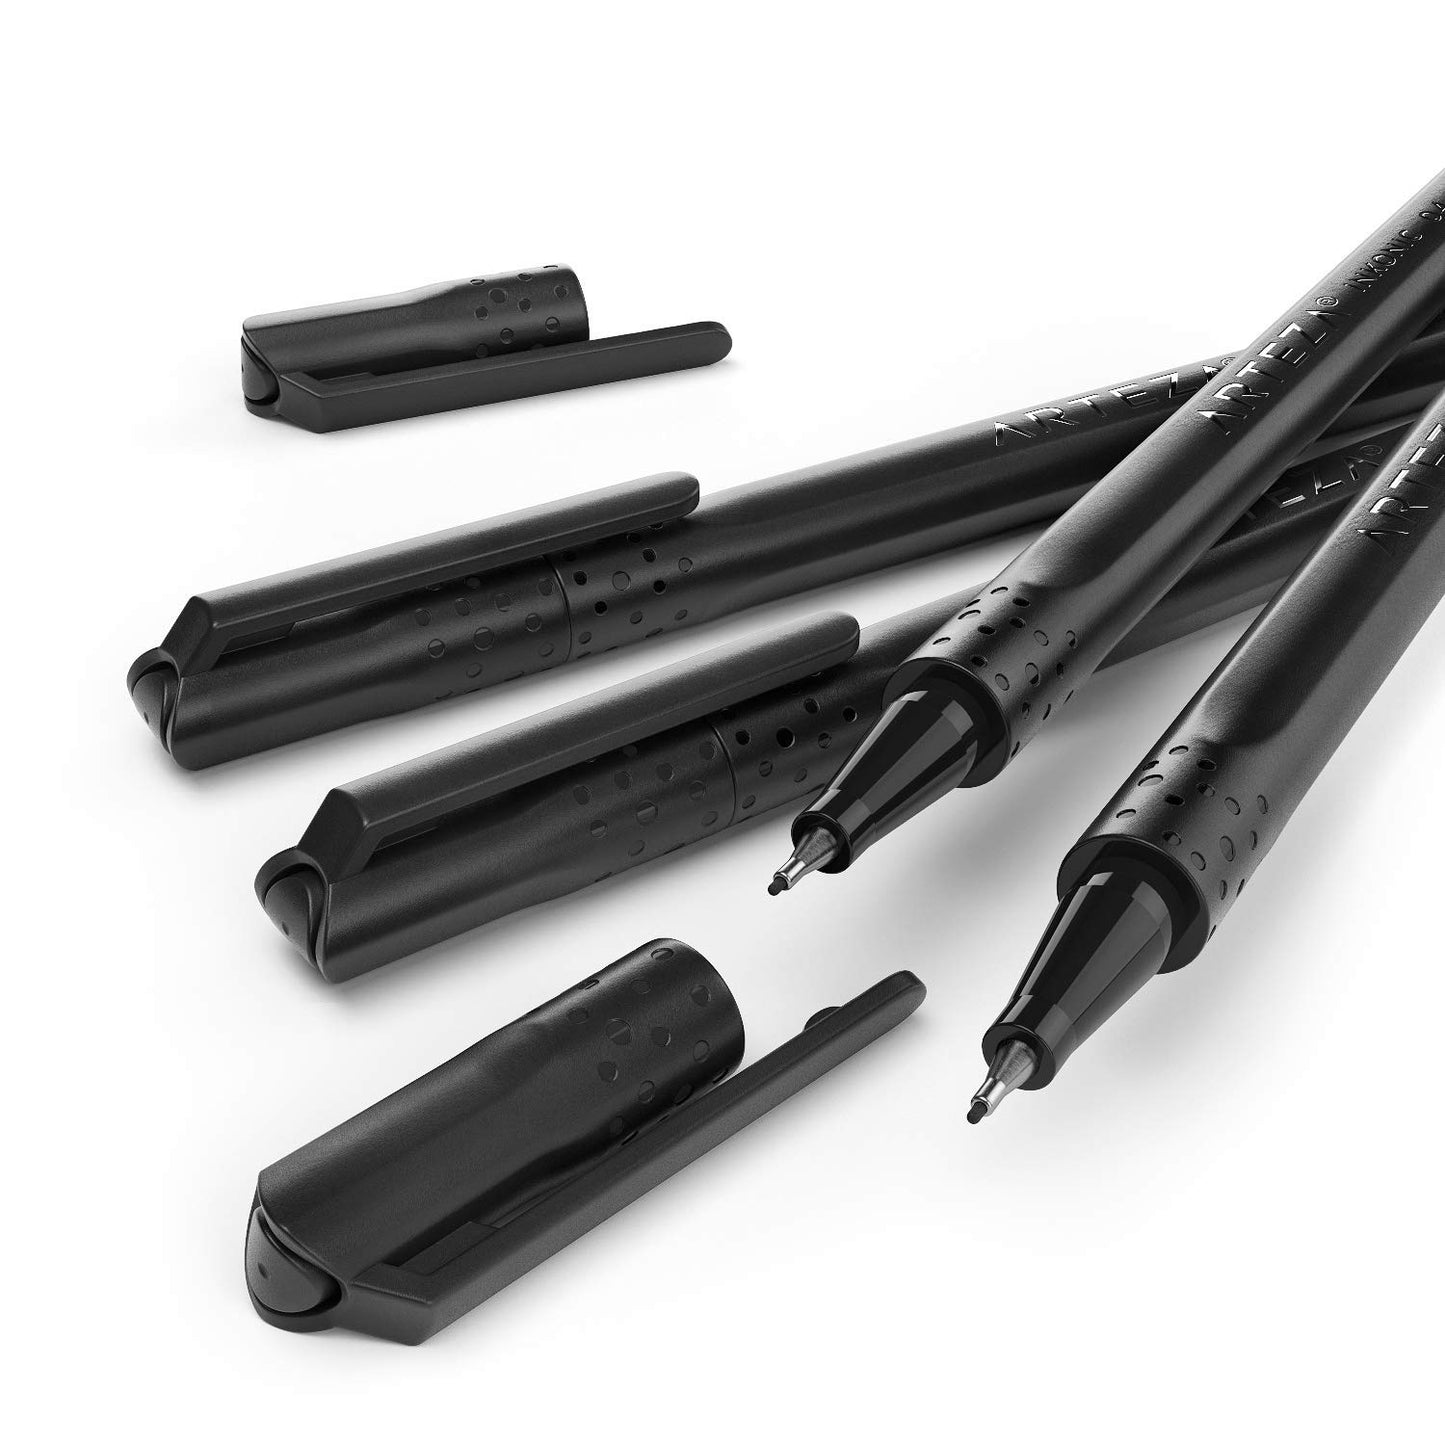 Arteza Inkonic™ Fineliner Pens, Black - Pack of 12